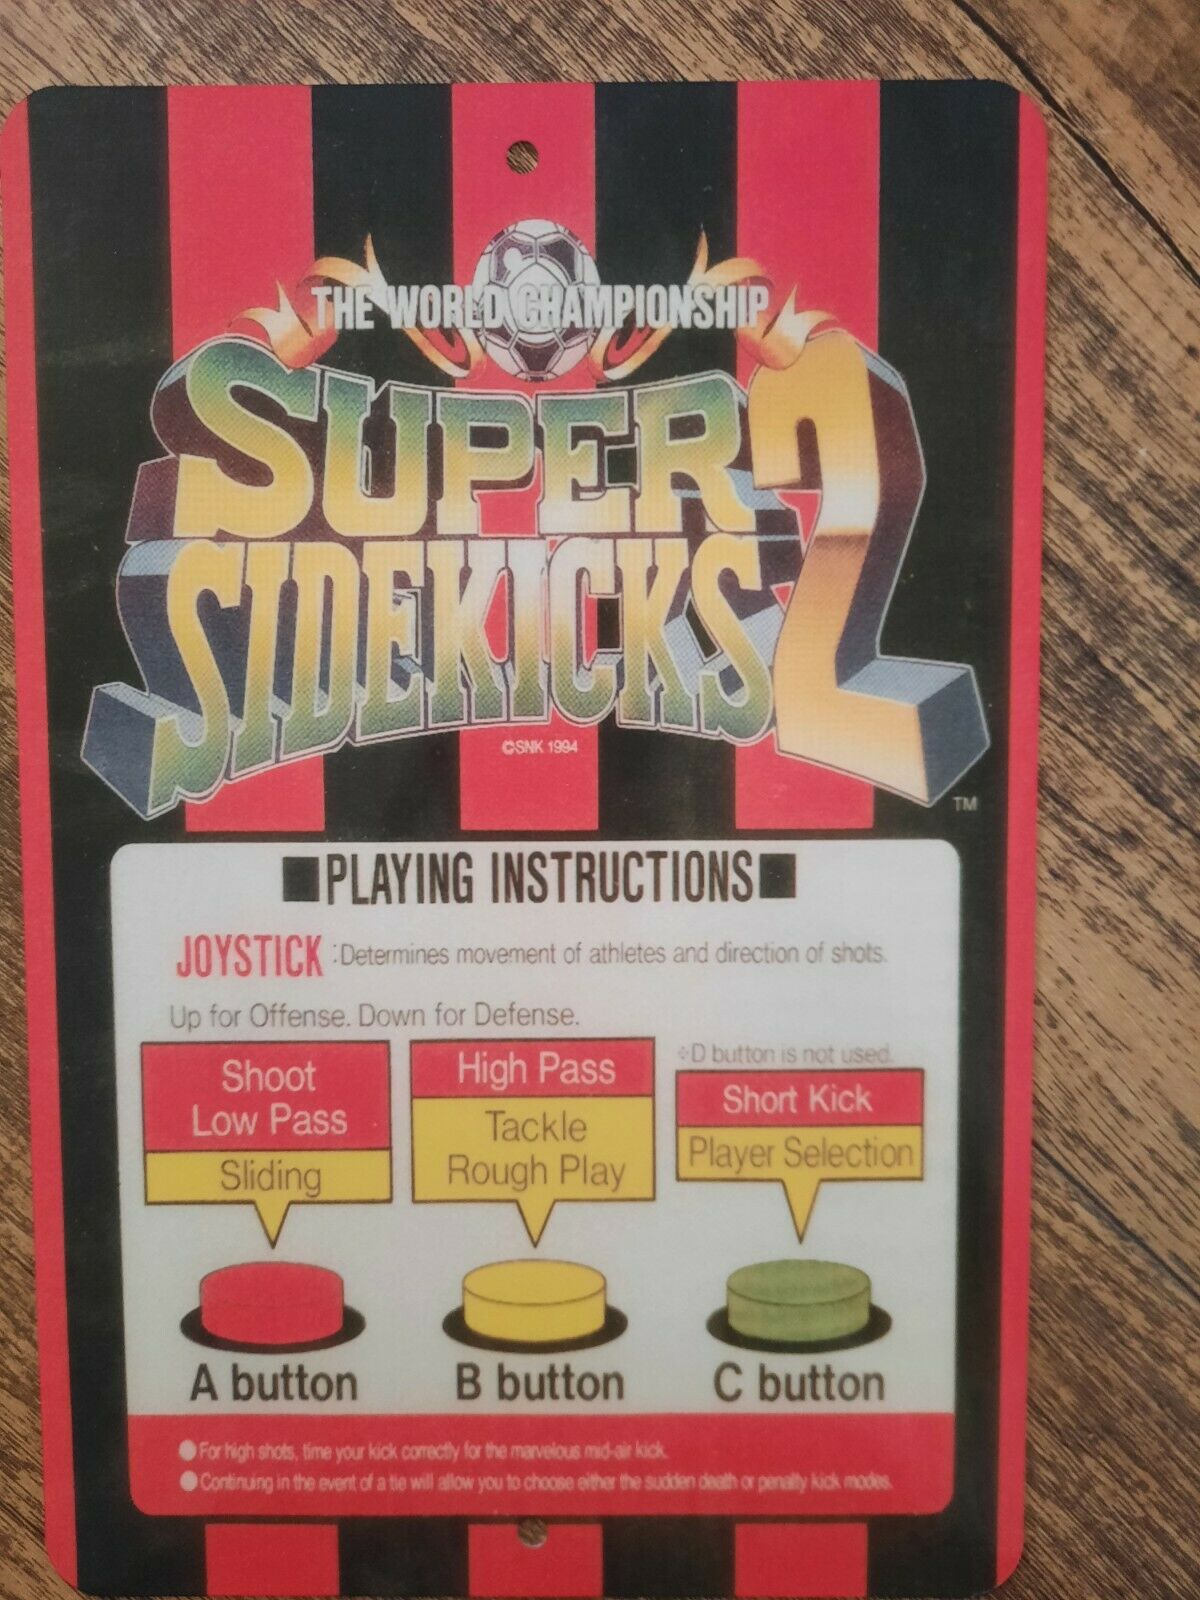 Super Sidekicks 2 Video Game 8x12 Metal Wall Sign